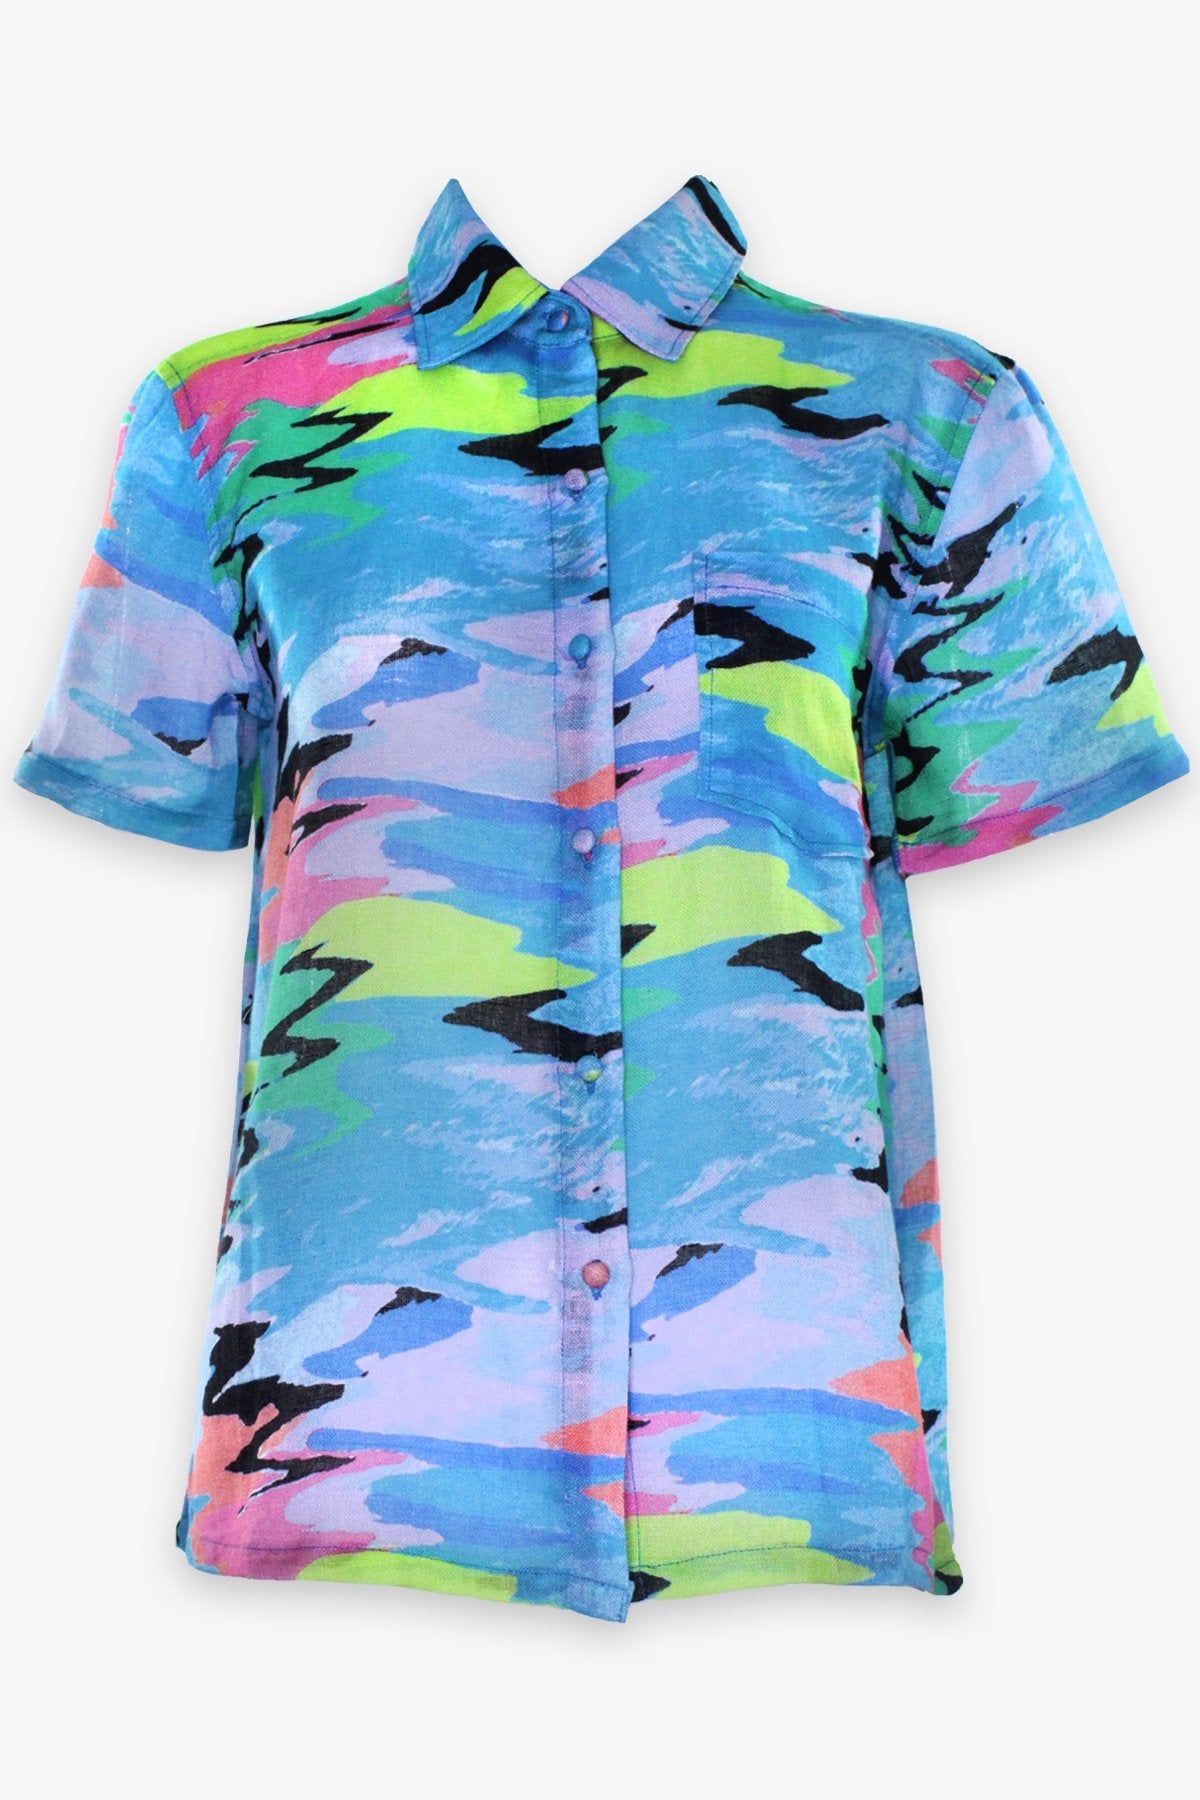 The Cabana Shirt in Distortia - shop-olivia.com